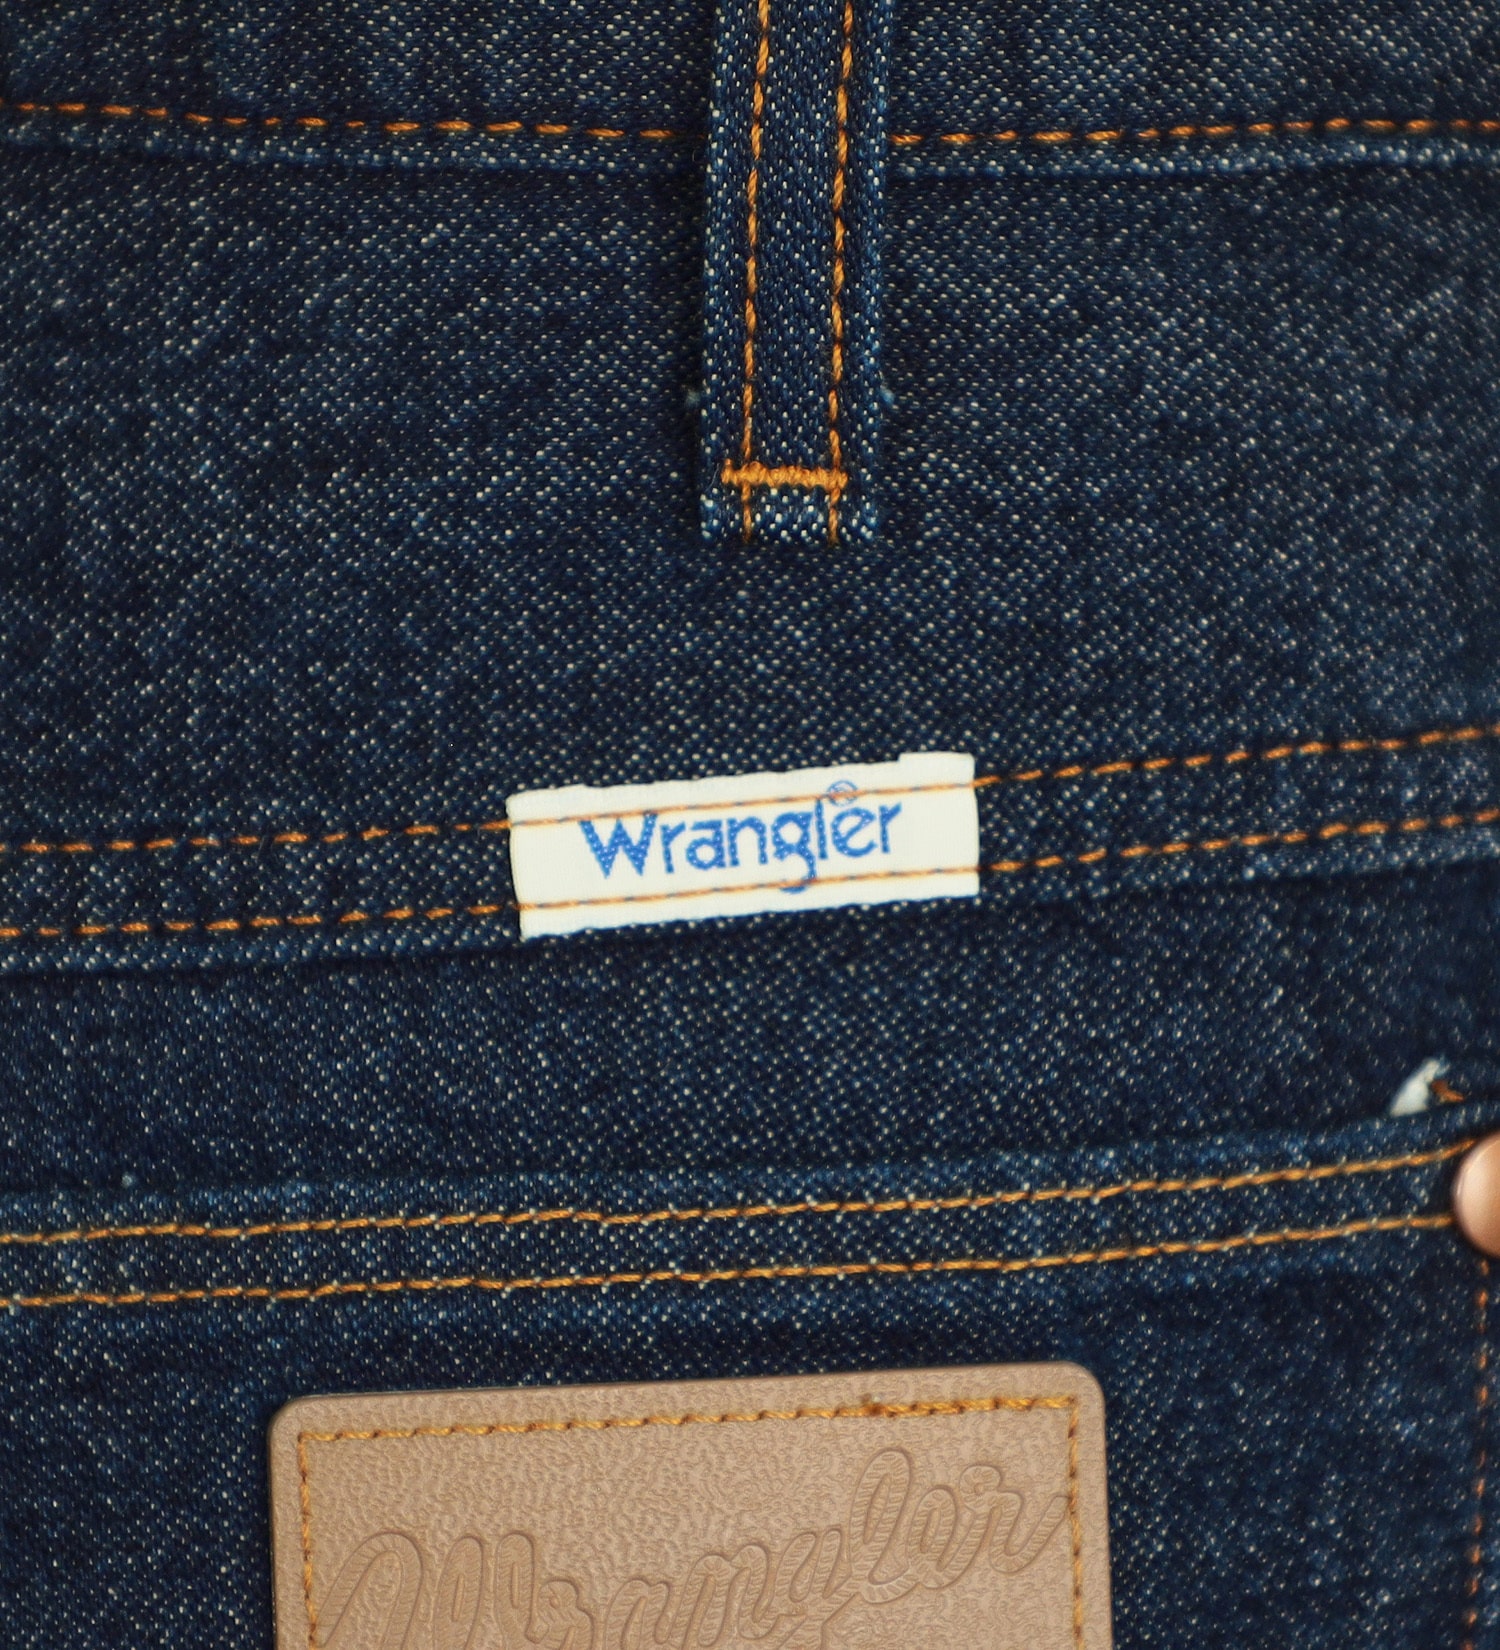 Wrangler(ラングラー)の【GW SALE】US ORIGINALS/ロングスカート|スカート/デニムスカート/レディース|インディゴブルー